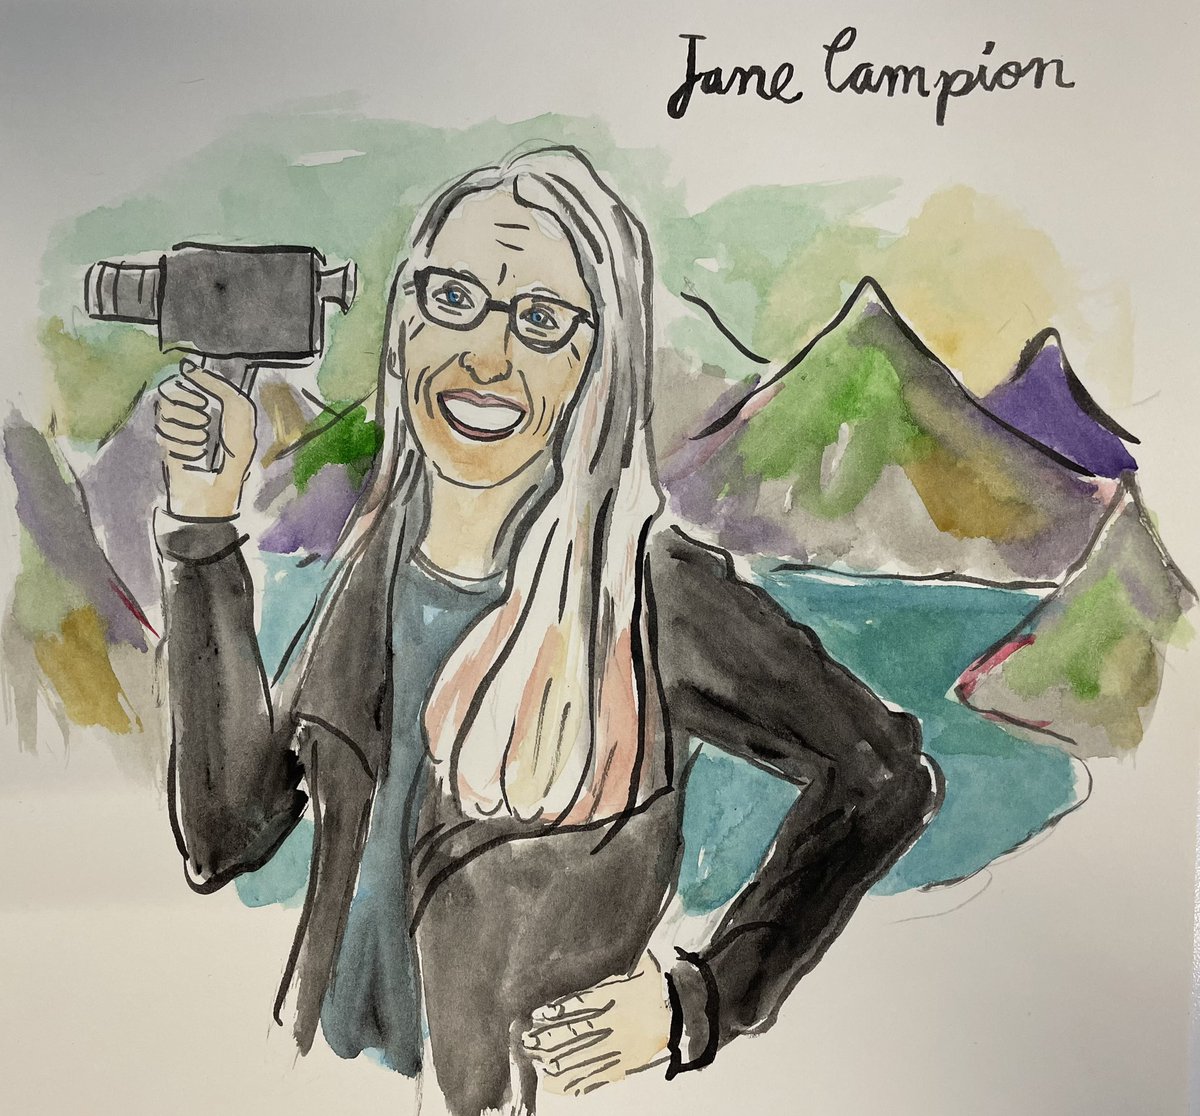 ‘Jane Campion’,
watercolour and ink on paper,
by award-winning artist, Sarah Laing.

@SarahELaing 
@DirectedbyWomen @netflix 
#JaneCampion